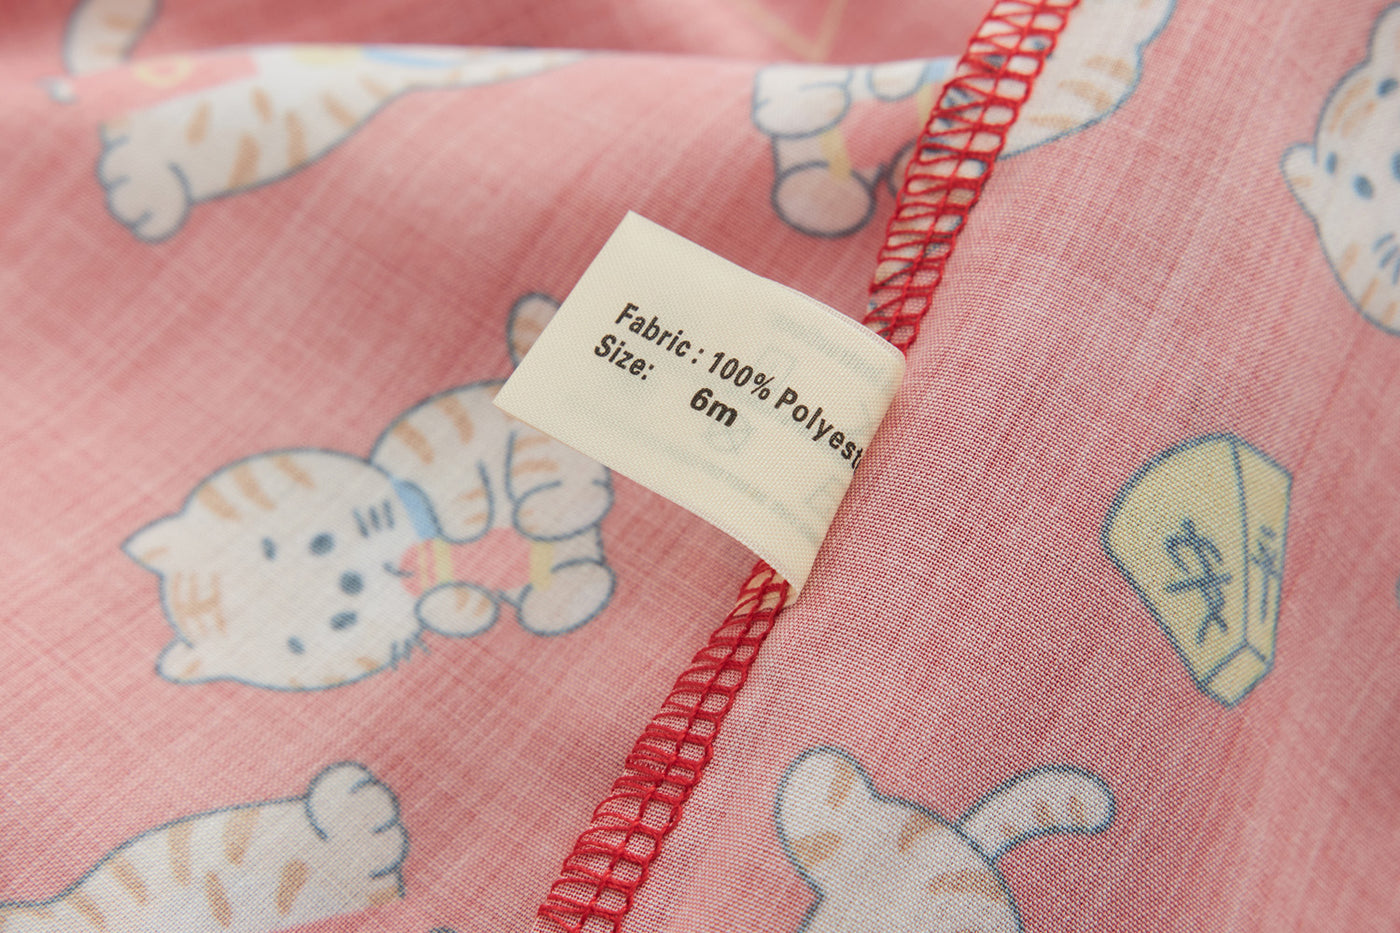 Baby Girl Red Lucky Cat Cheongsam Dress 0817X - Little Kooma